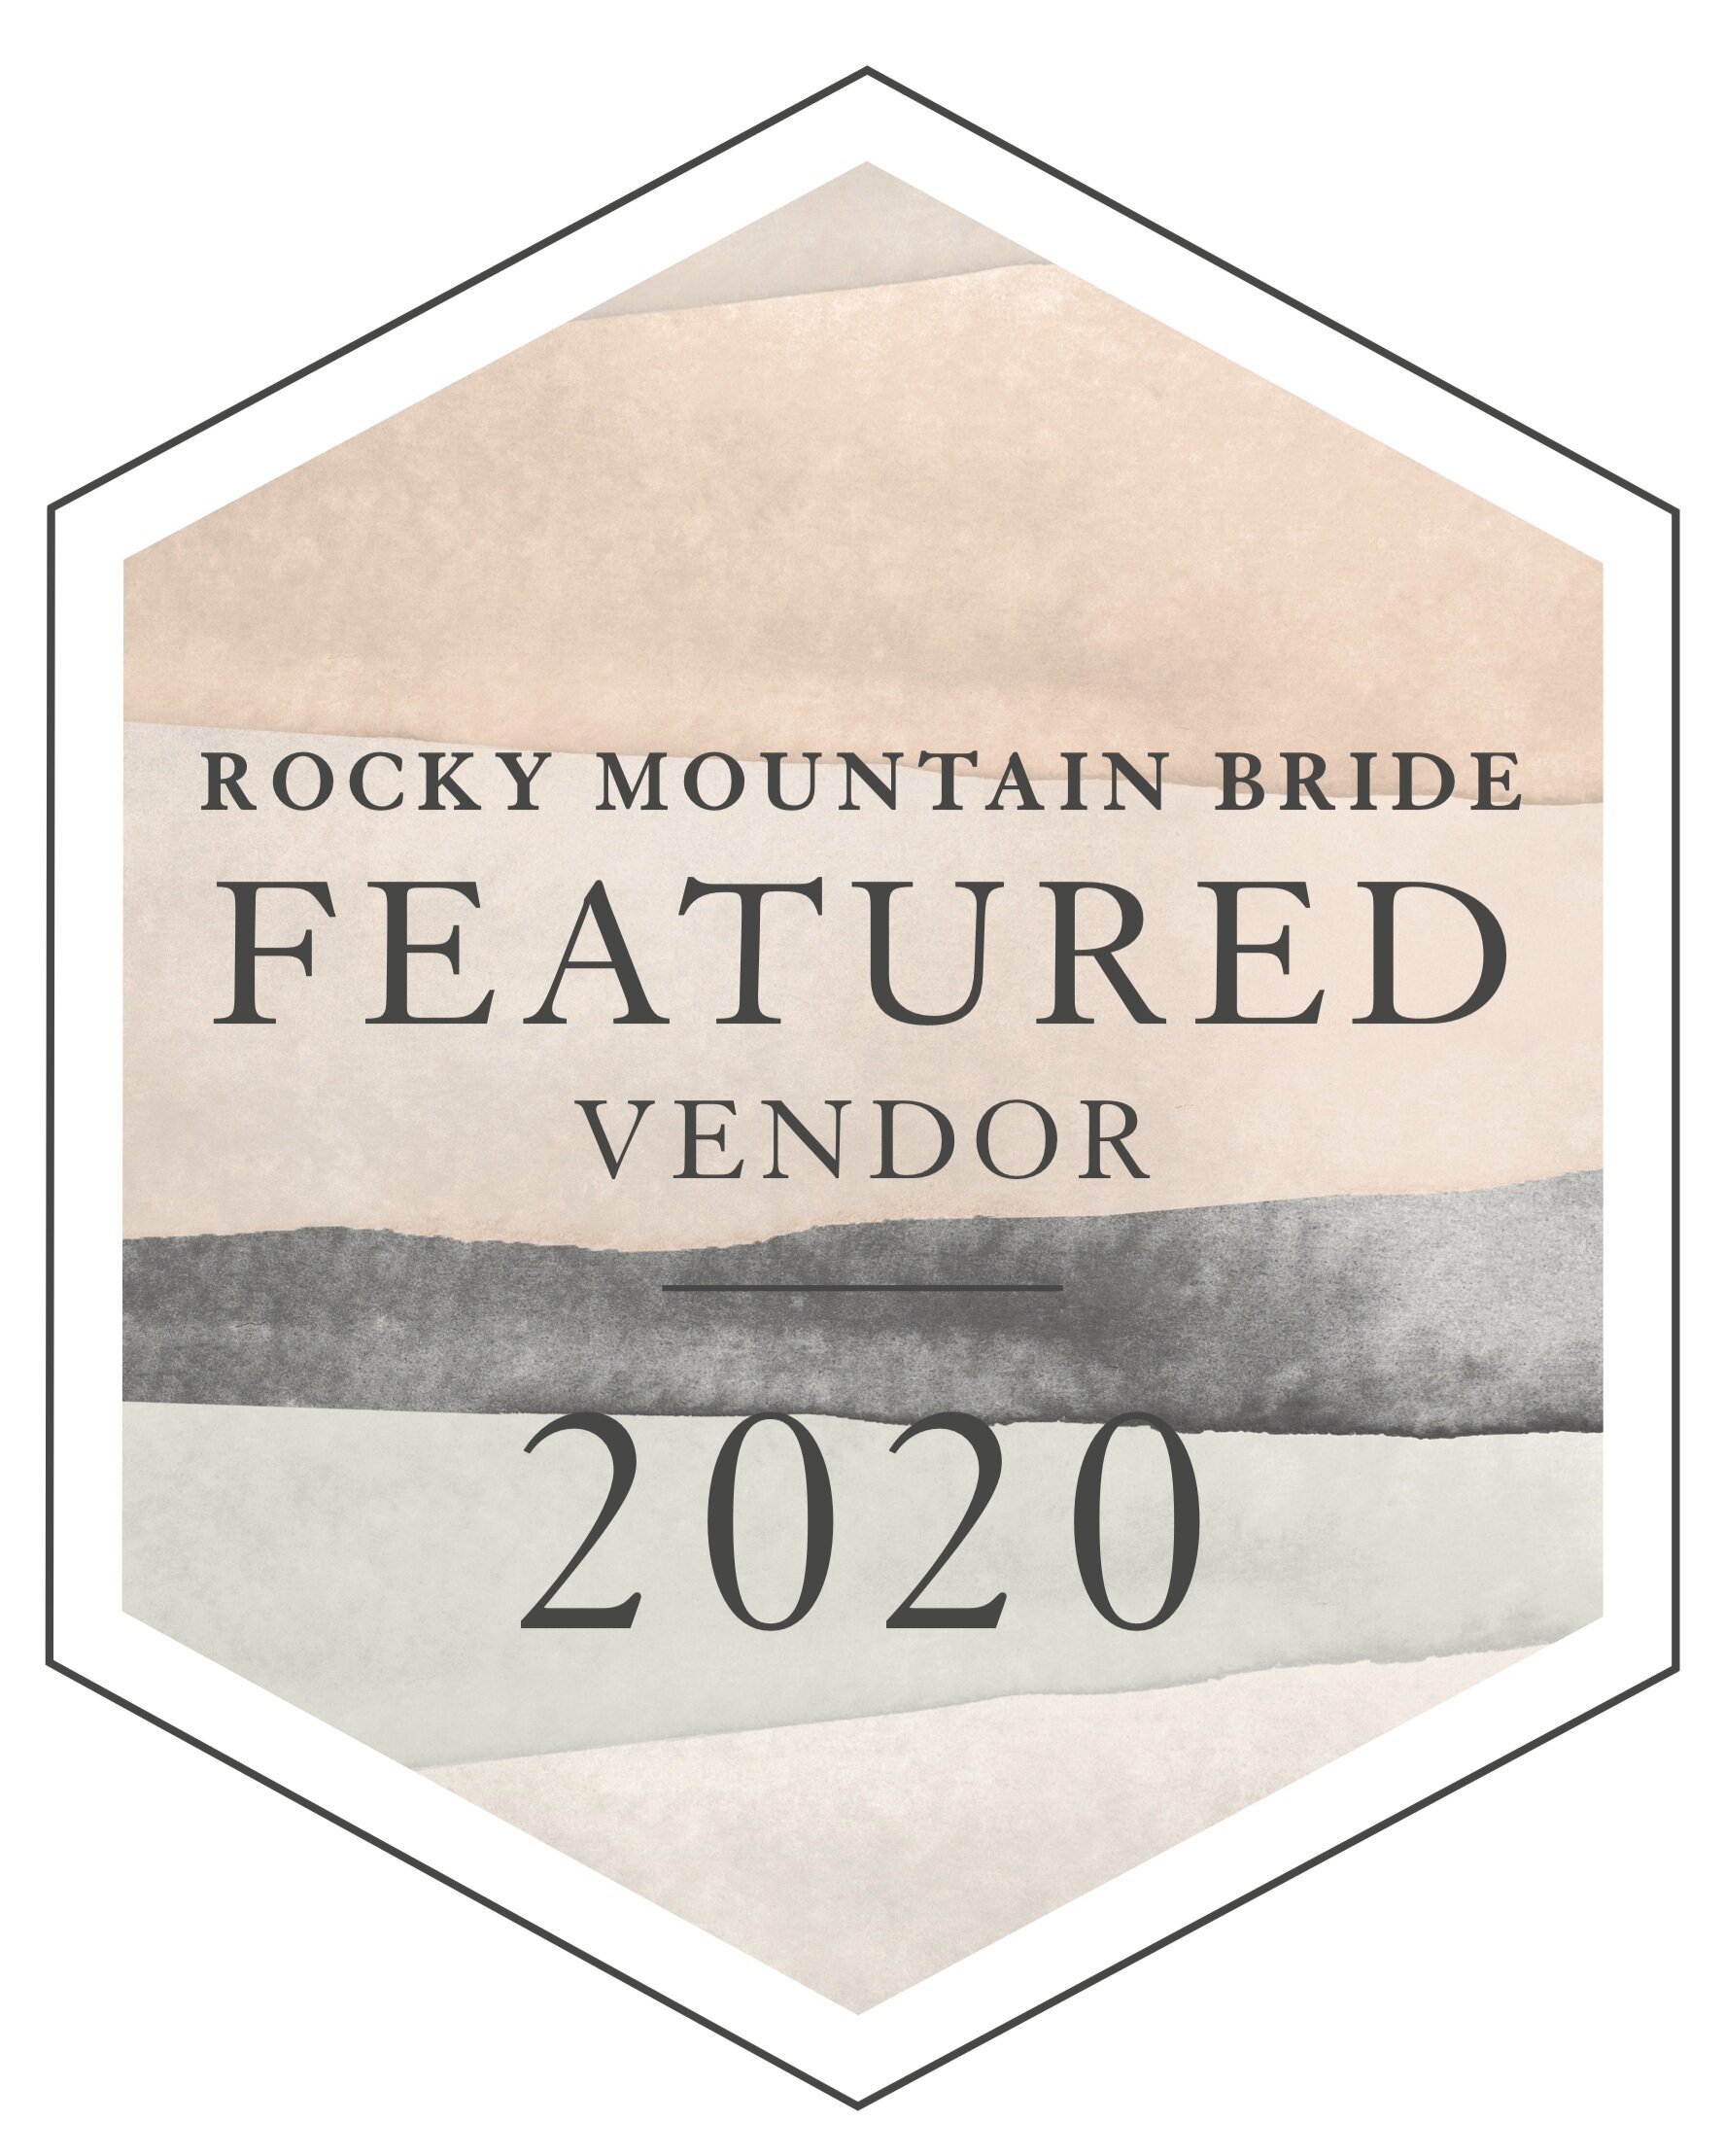 Rocky+Mountain+Bride+Featured+Vendor+2020+badge-02.jpg